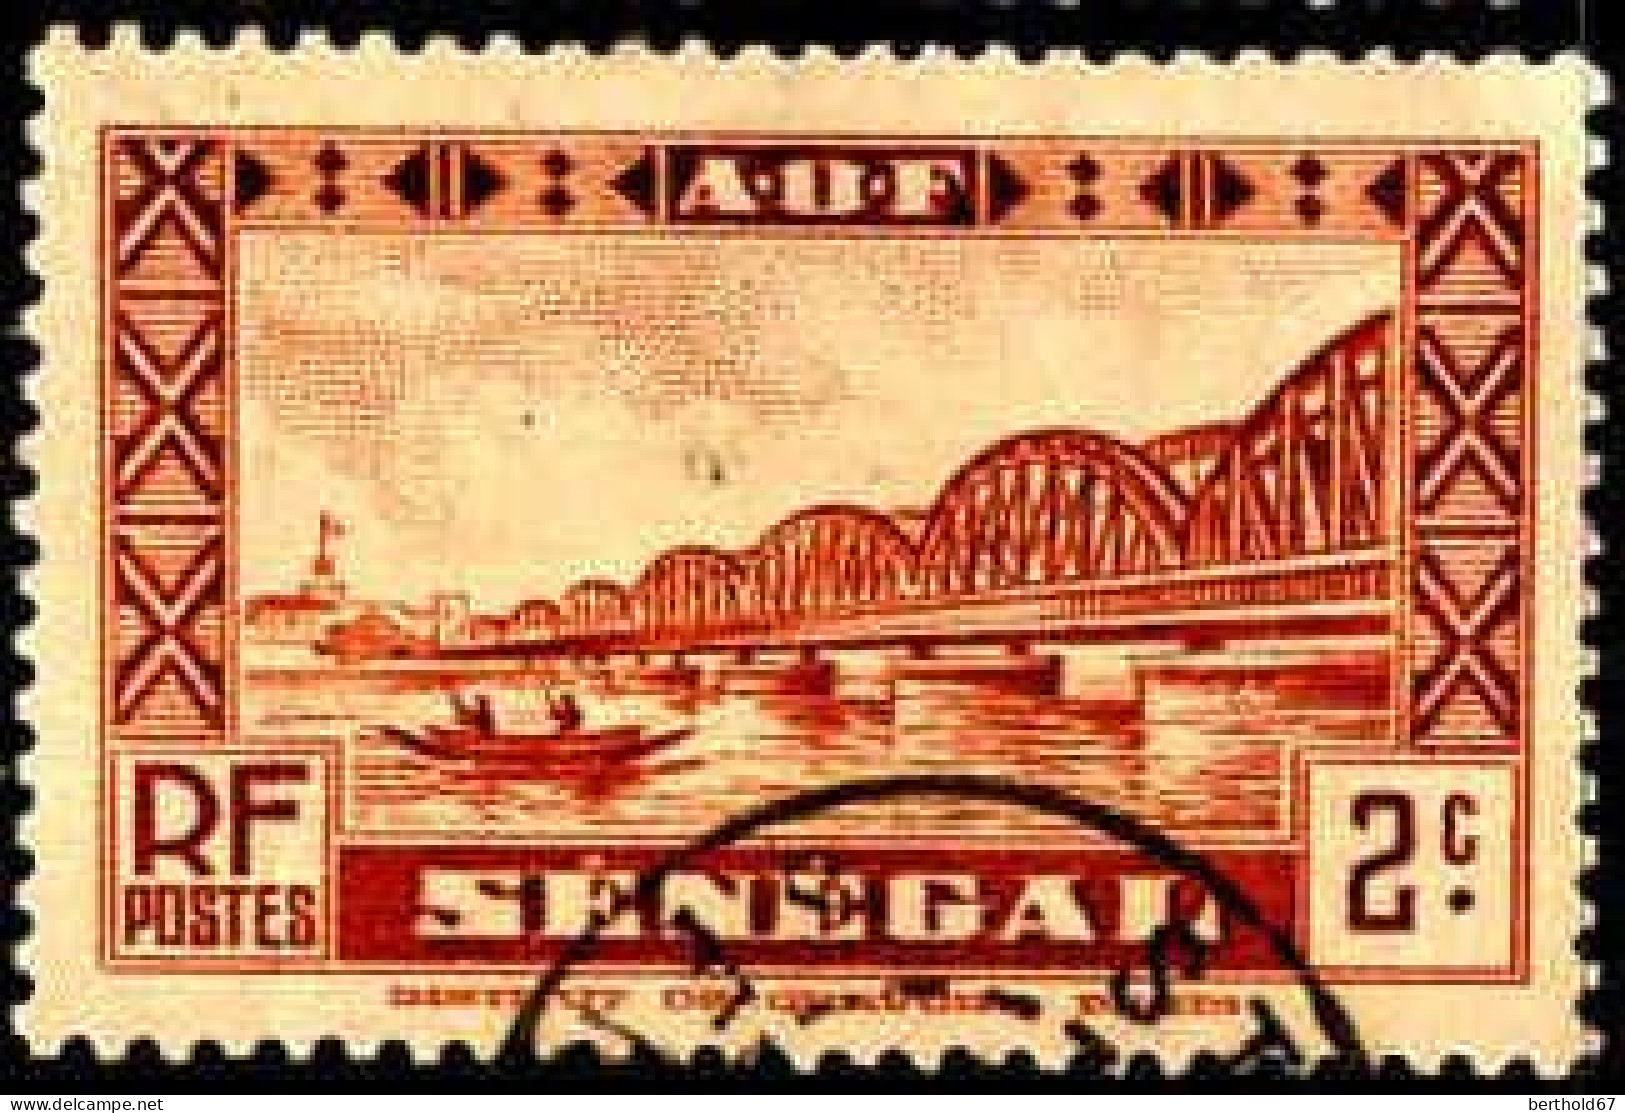 Sénégal Poste Obl Yv:115 Mi:119 Pont Faidherbe (TB Cachet Rond) - Used Stamps